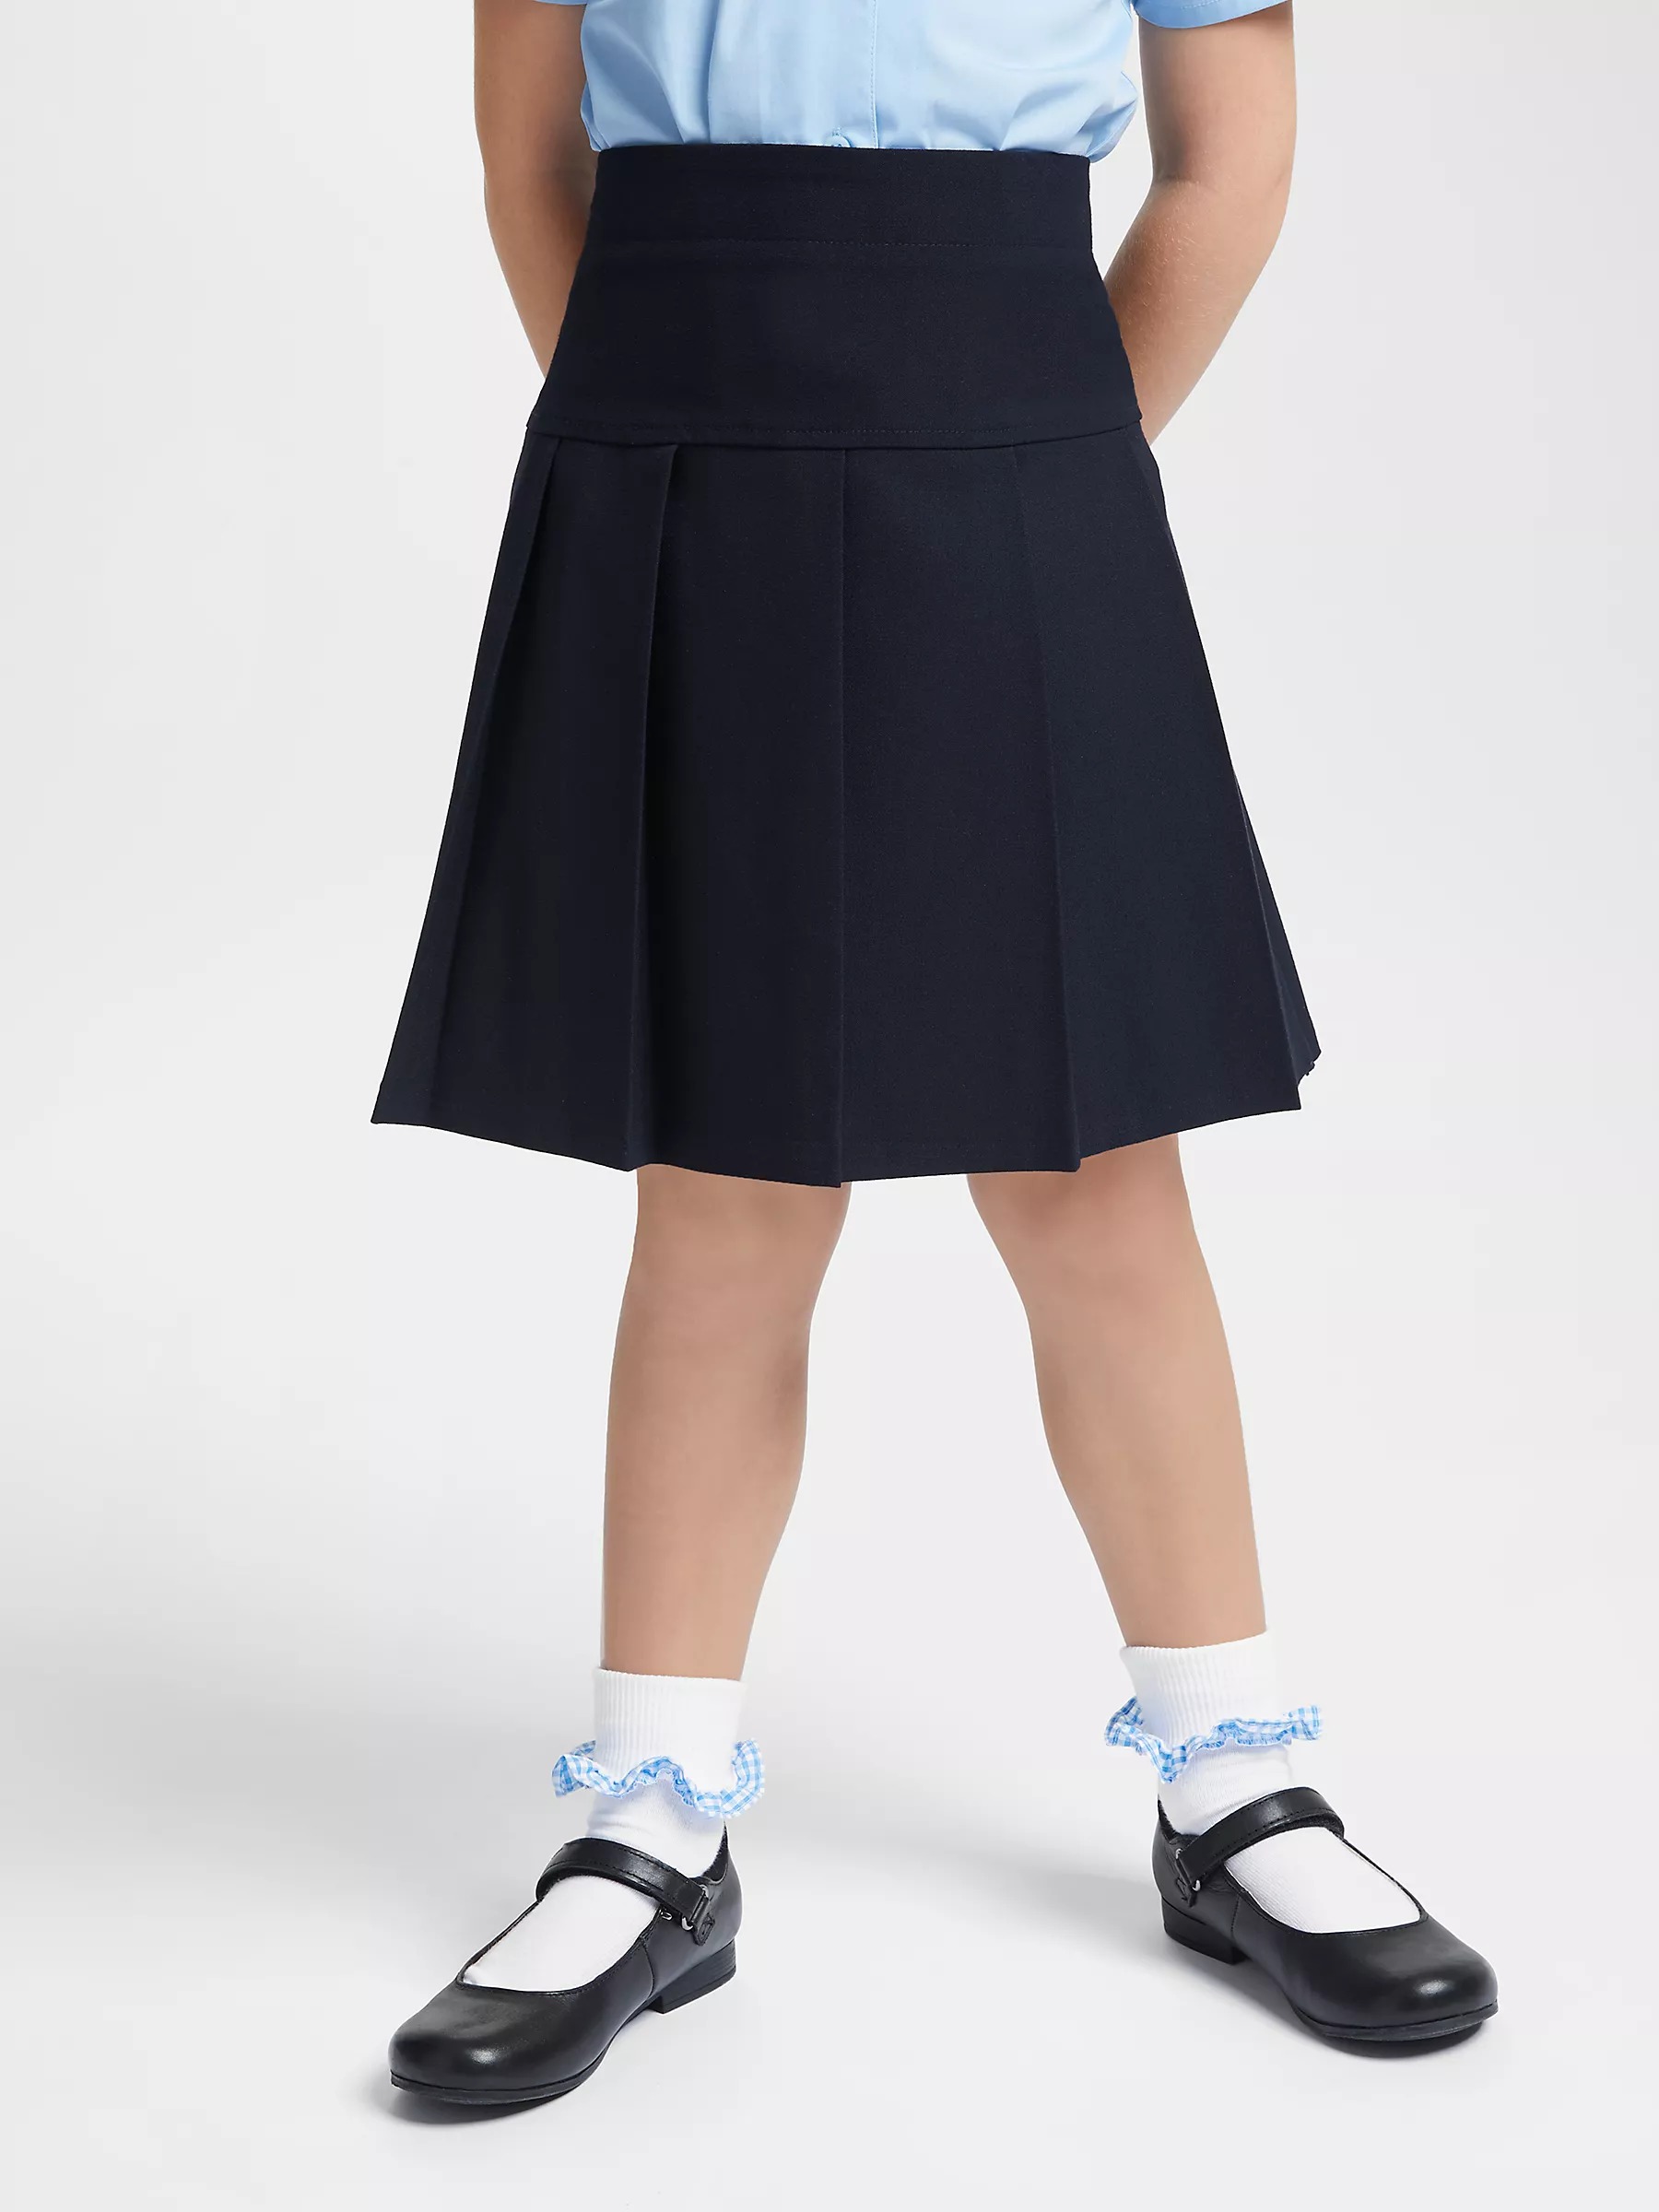 Girls school skirt uniform fabric polyester